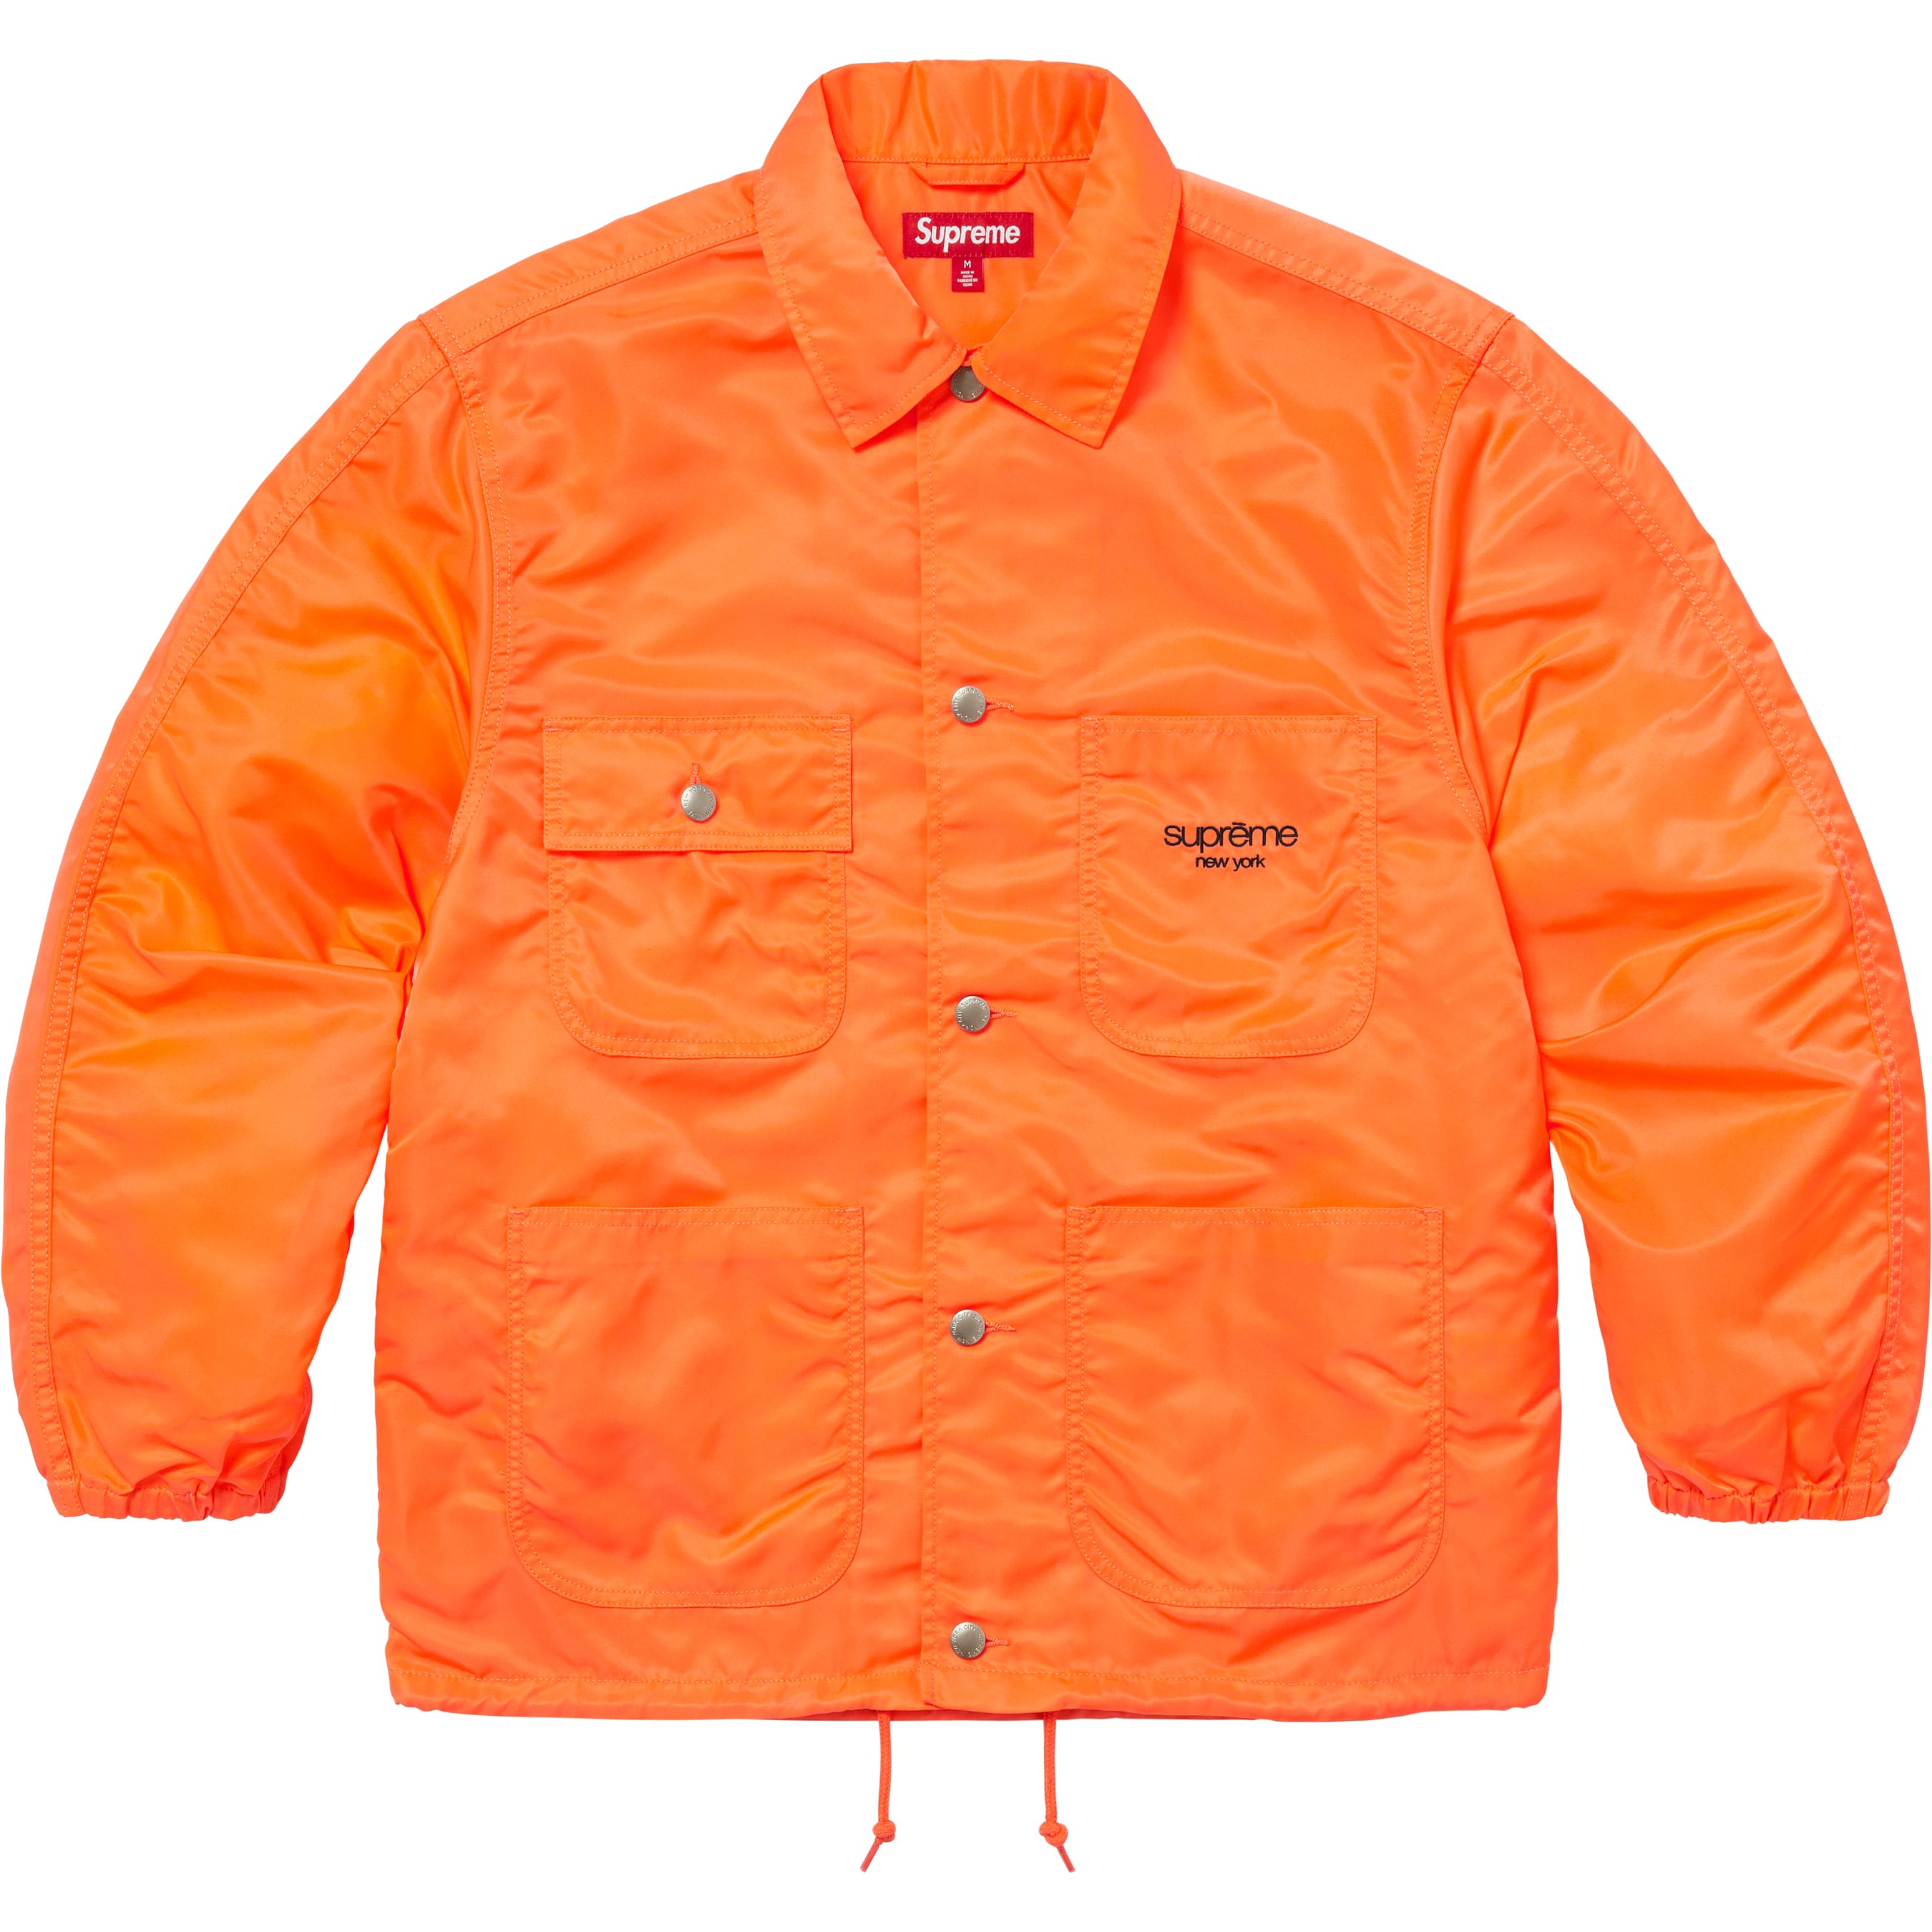 Пальто Supreme Nylon Chore, оранжевый пальто qiongyu повседневное 46 размер